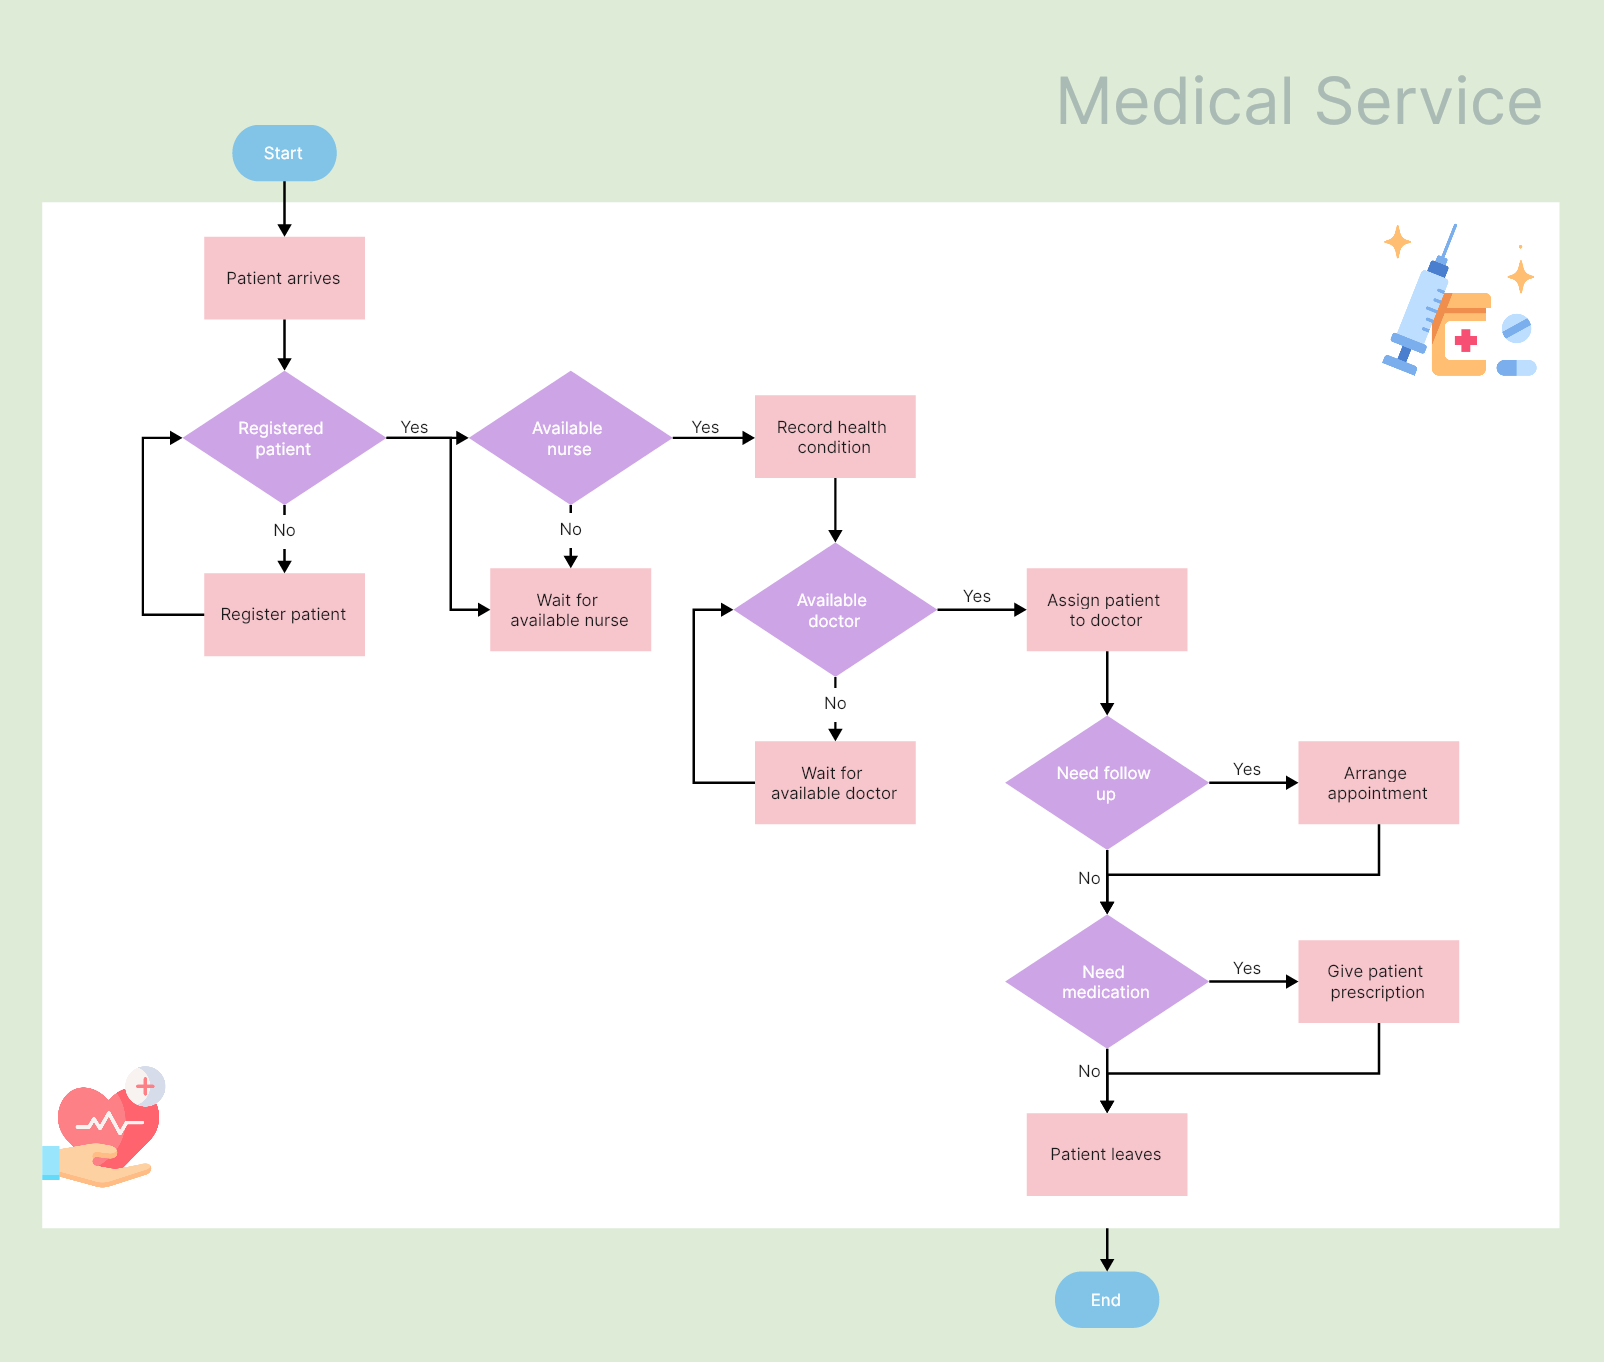 8. Medical Service Flowchart